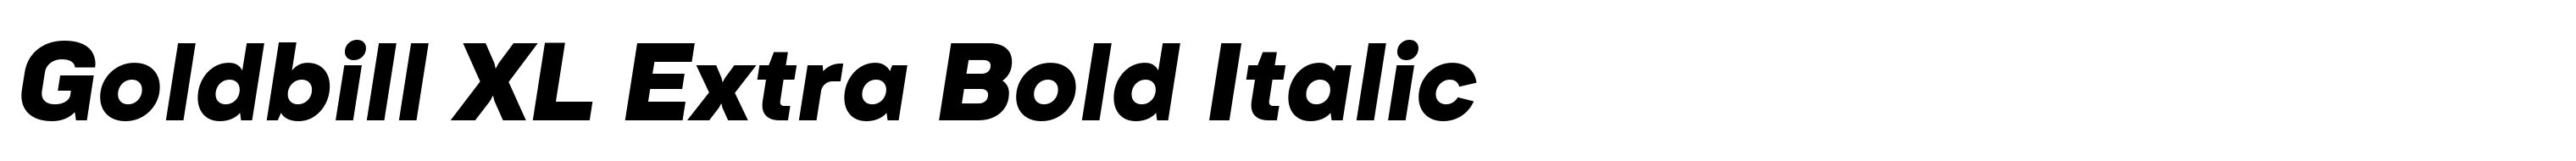 Goldbill XL Extra Bold Italic